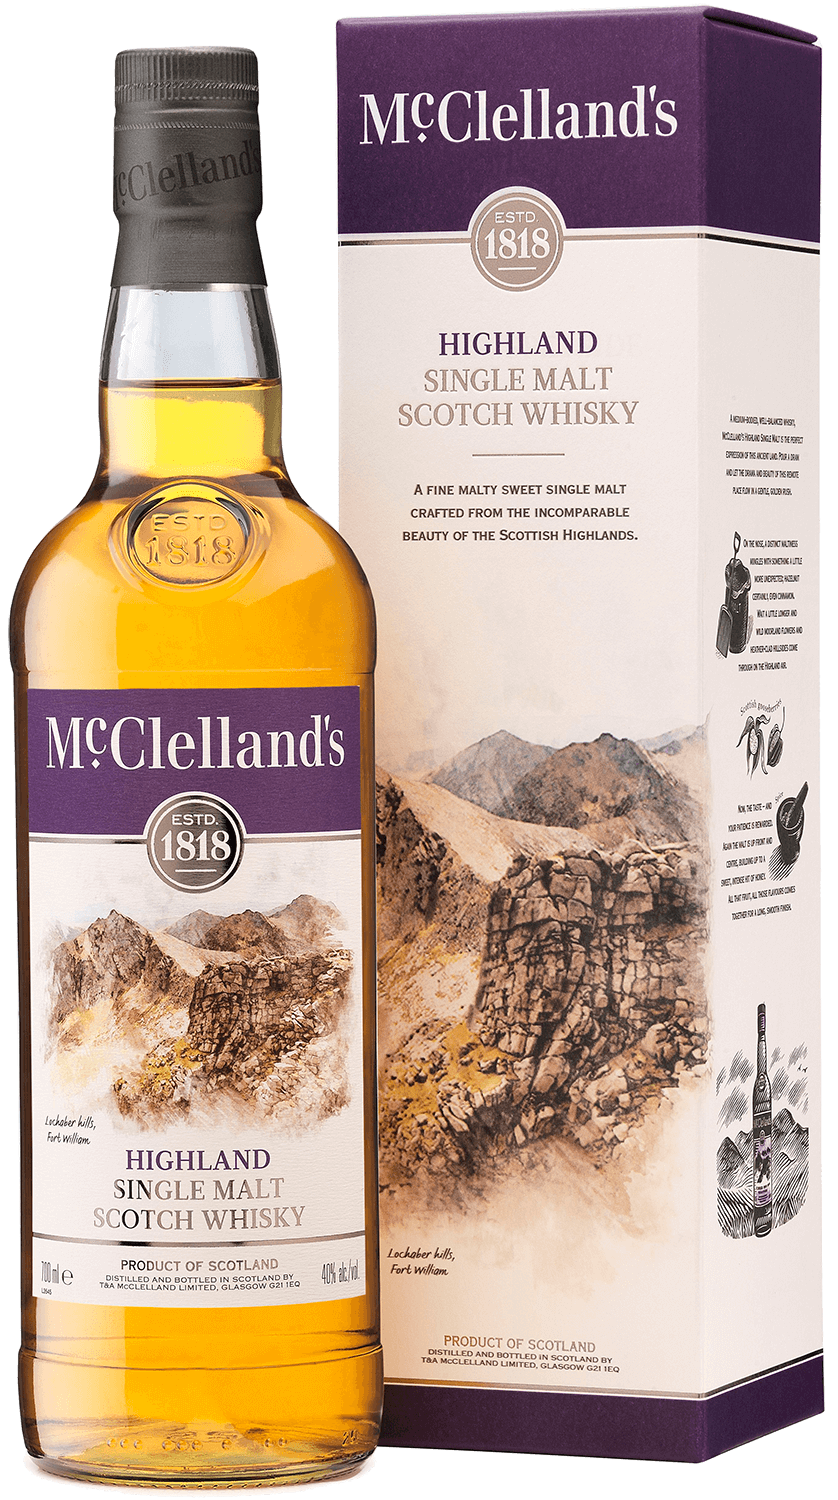 McClelland's Highland single malt scotch whisky (gift box)